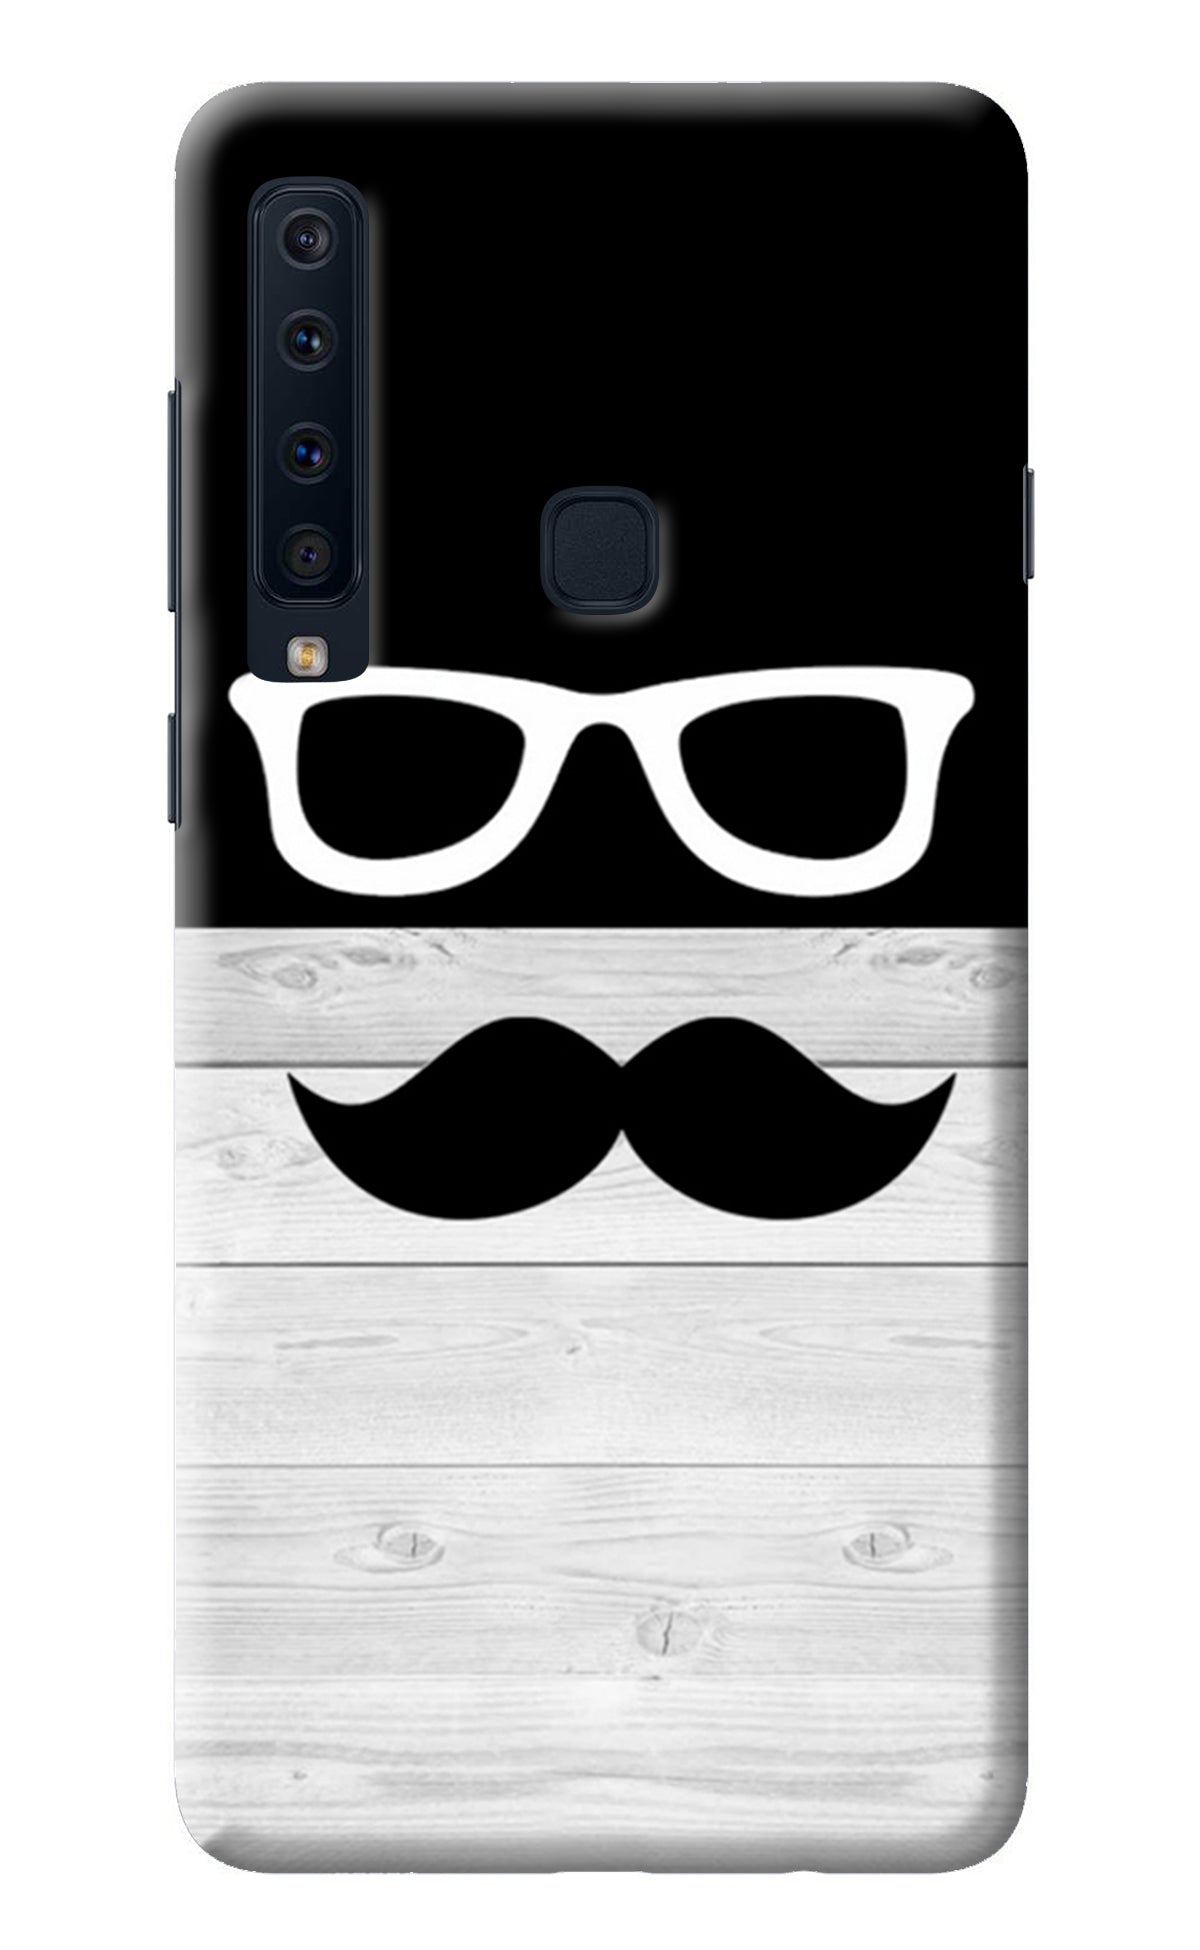 Mustache Samsung A9 Back Cover